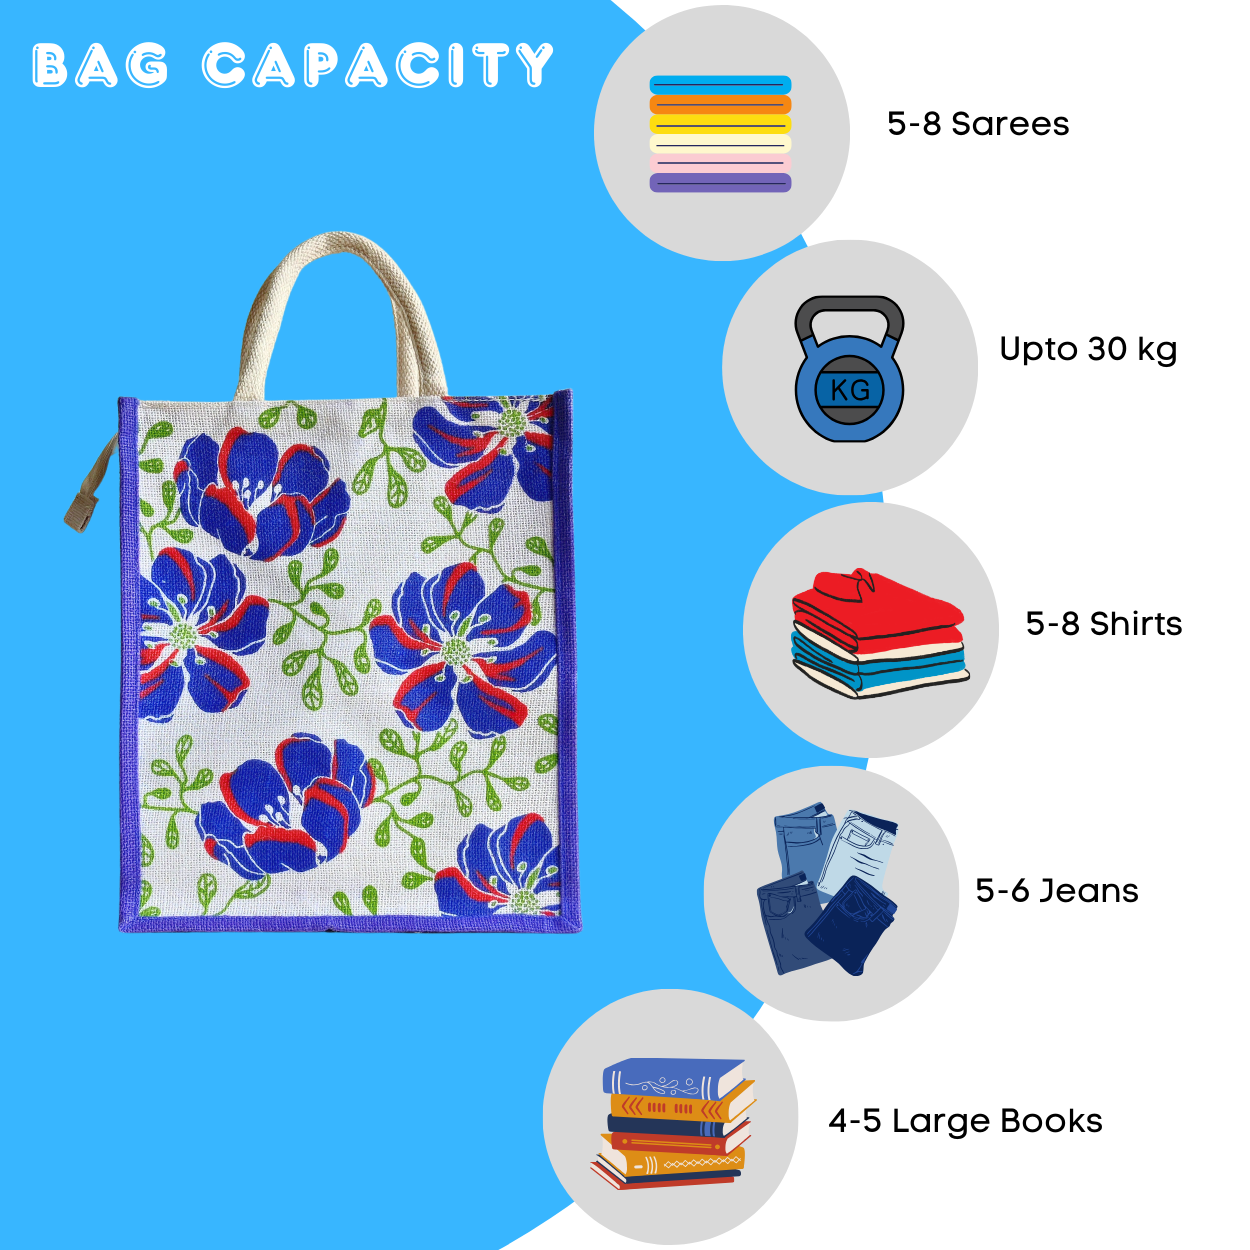 Printed Bold Floral Jute Shopping Bag - Blue Gusset